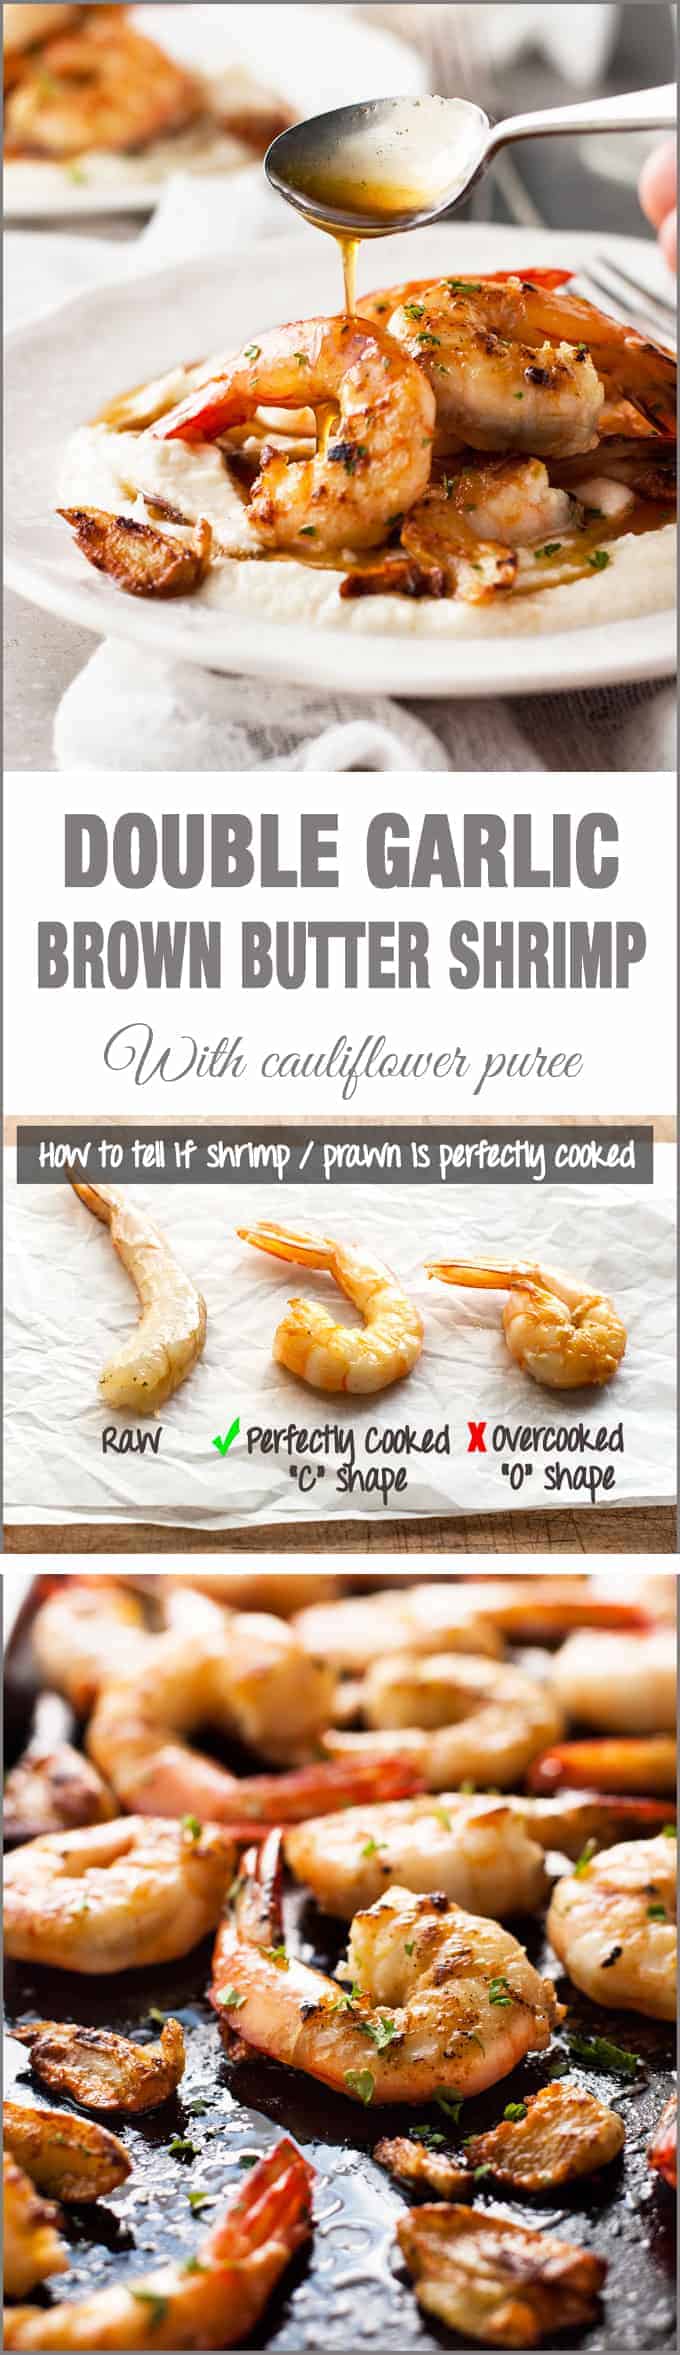 Double Garlic Brown Butter Shrimp (Prawns) - garlic prawns with garlic infused brown butter. Simple and fast to make, but so elegant!